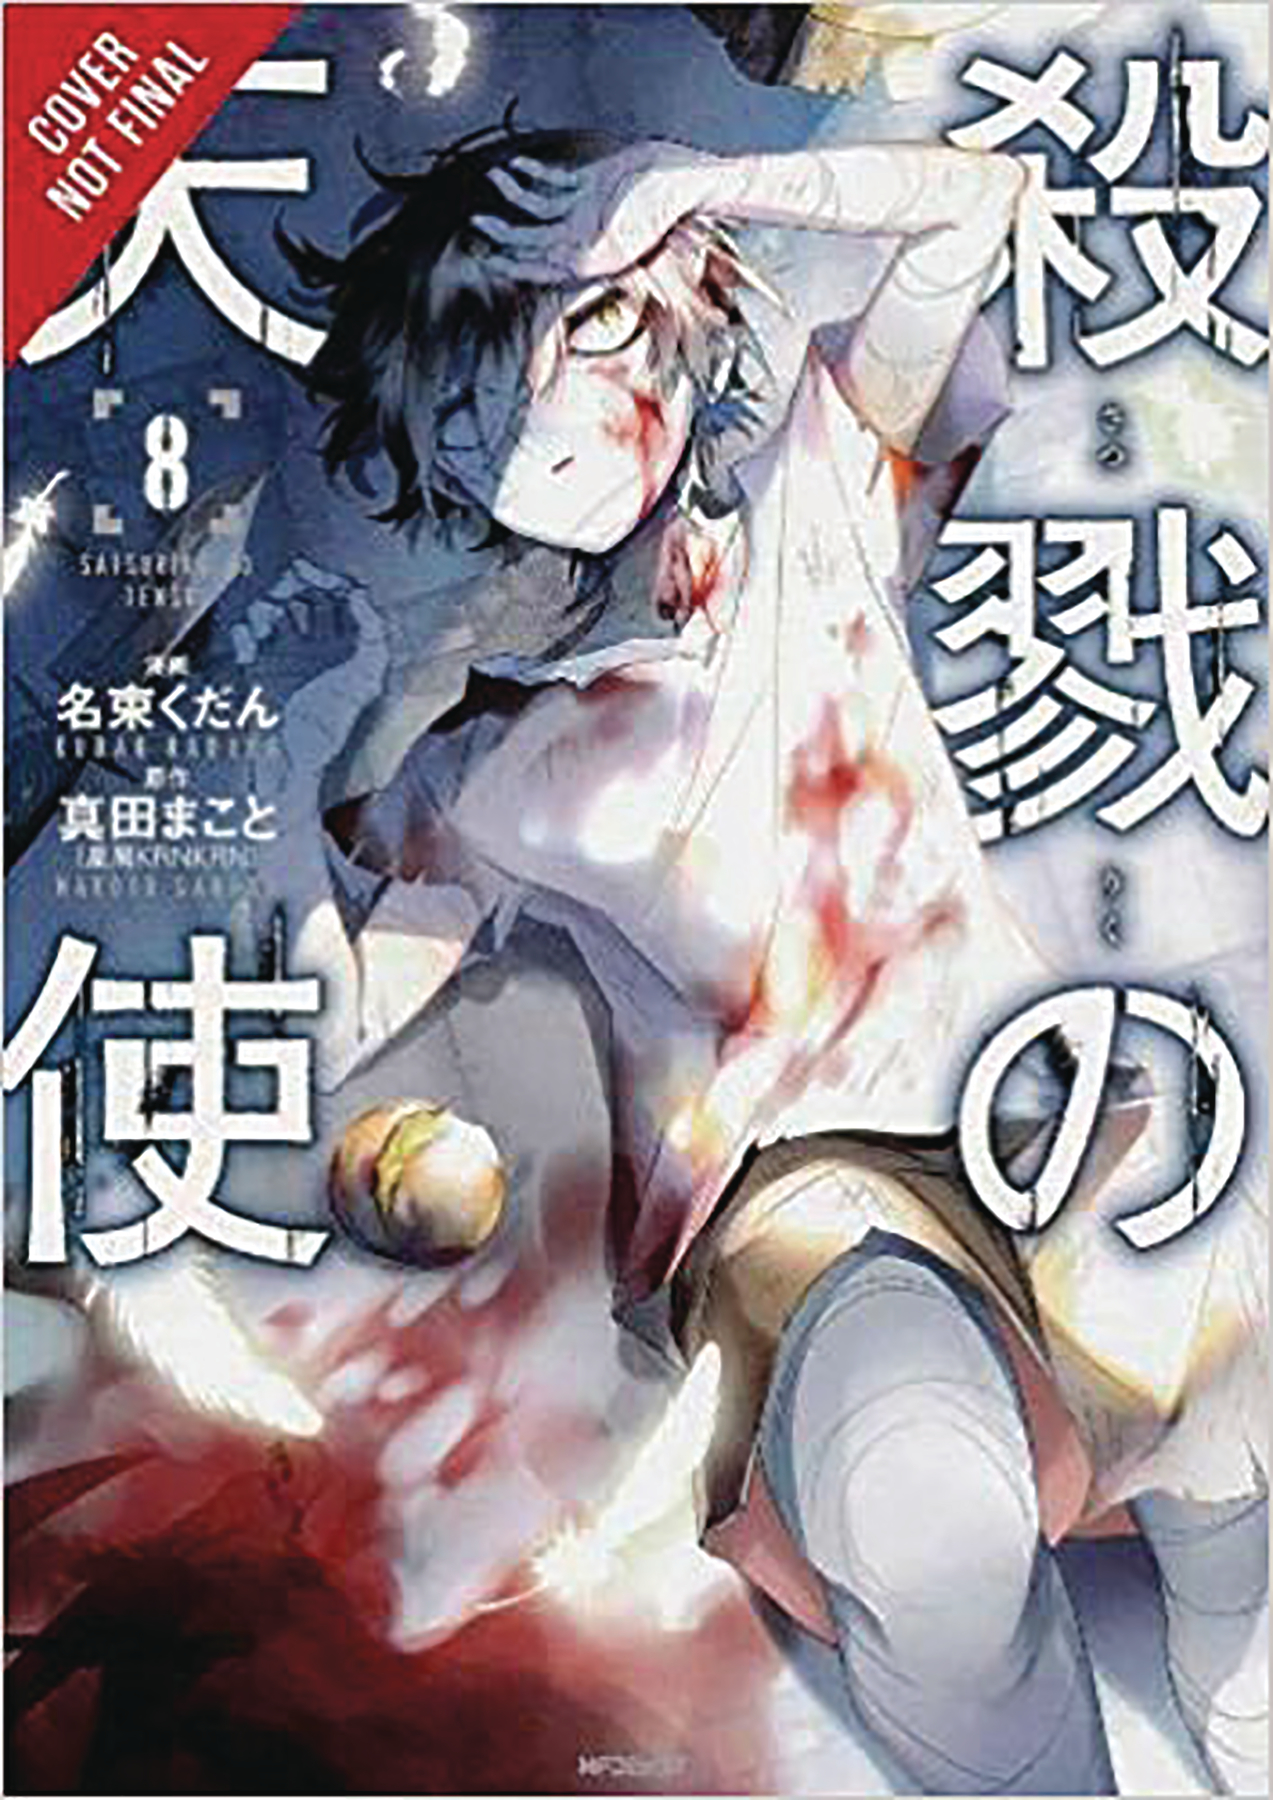 Angels of Death Manga Volume 8